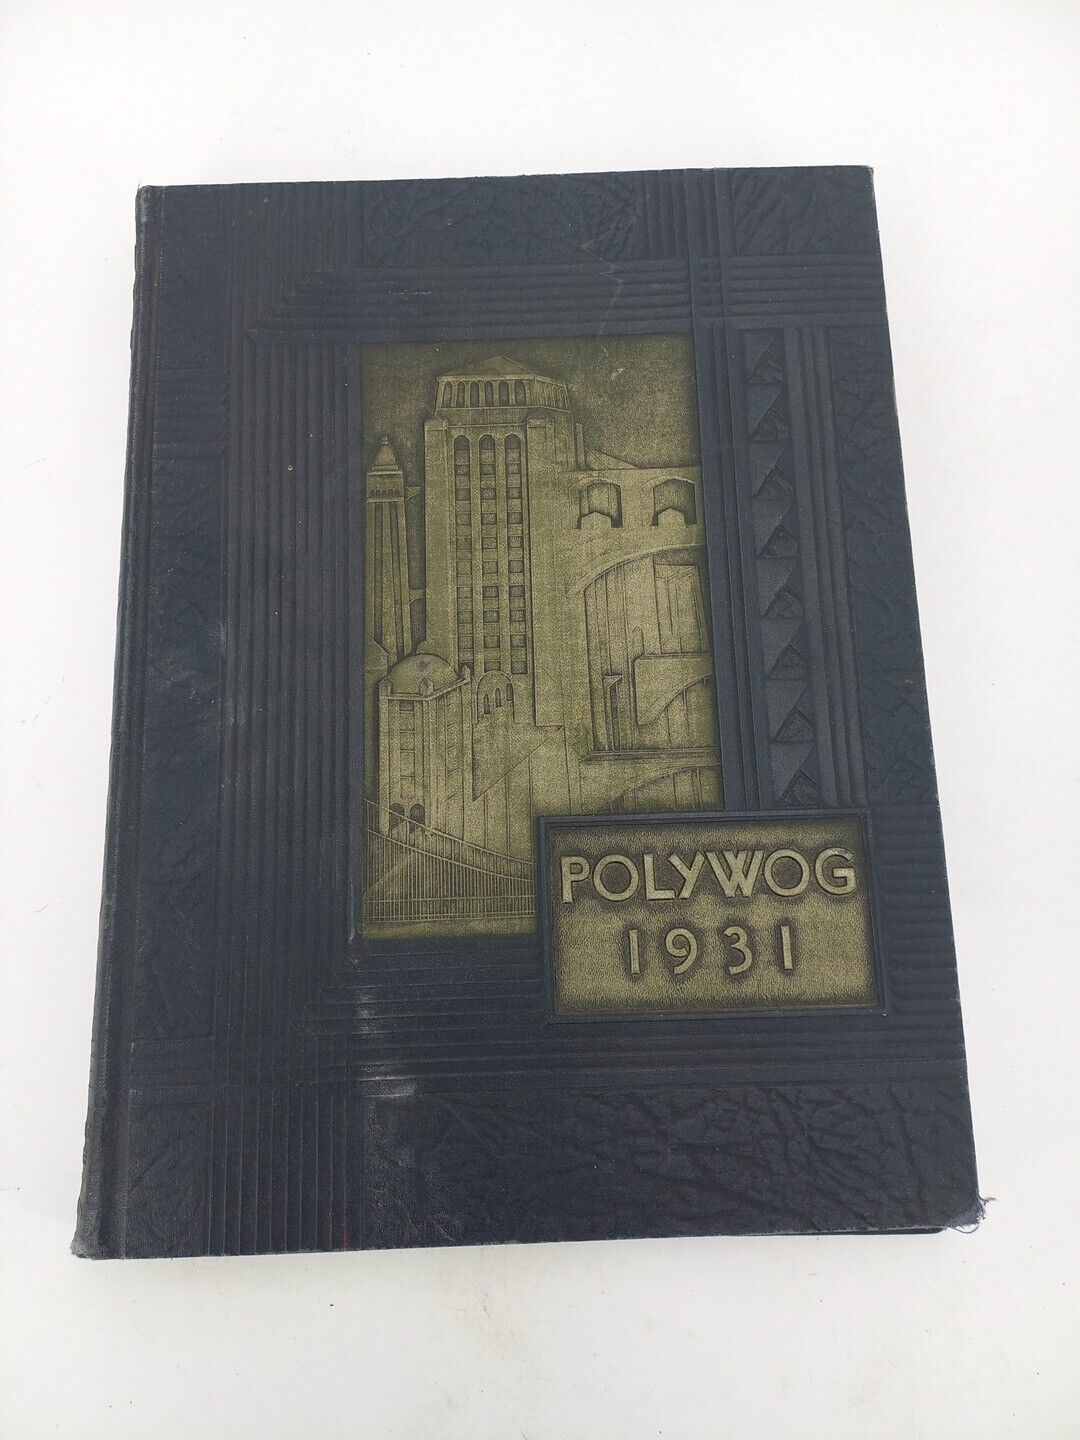 Polytechnic institute of brooklyn polywog 1931 year book